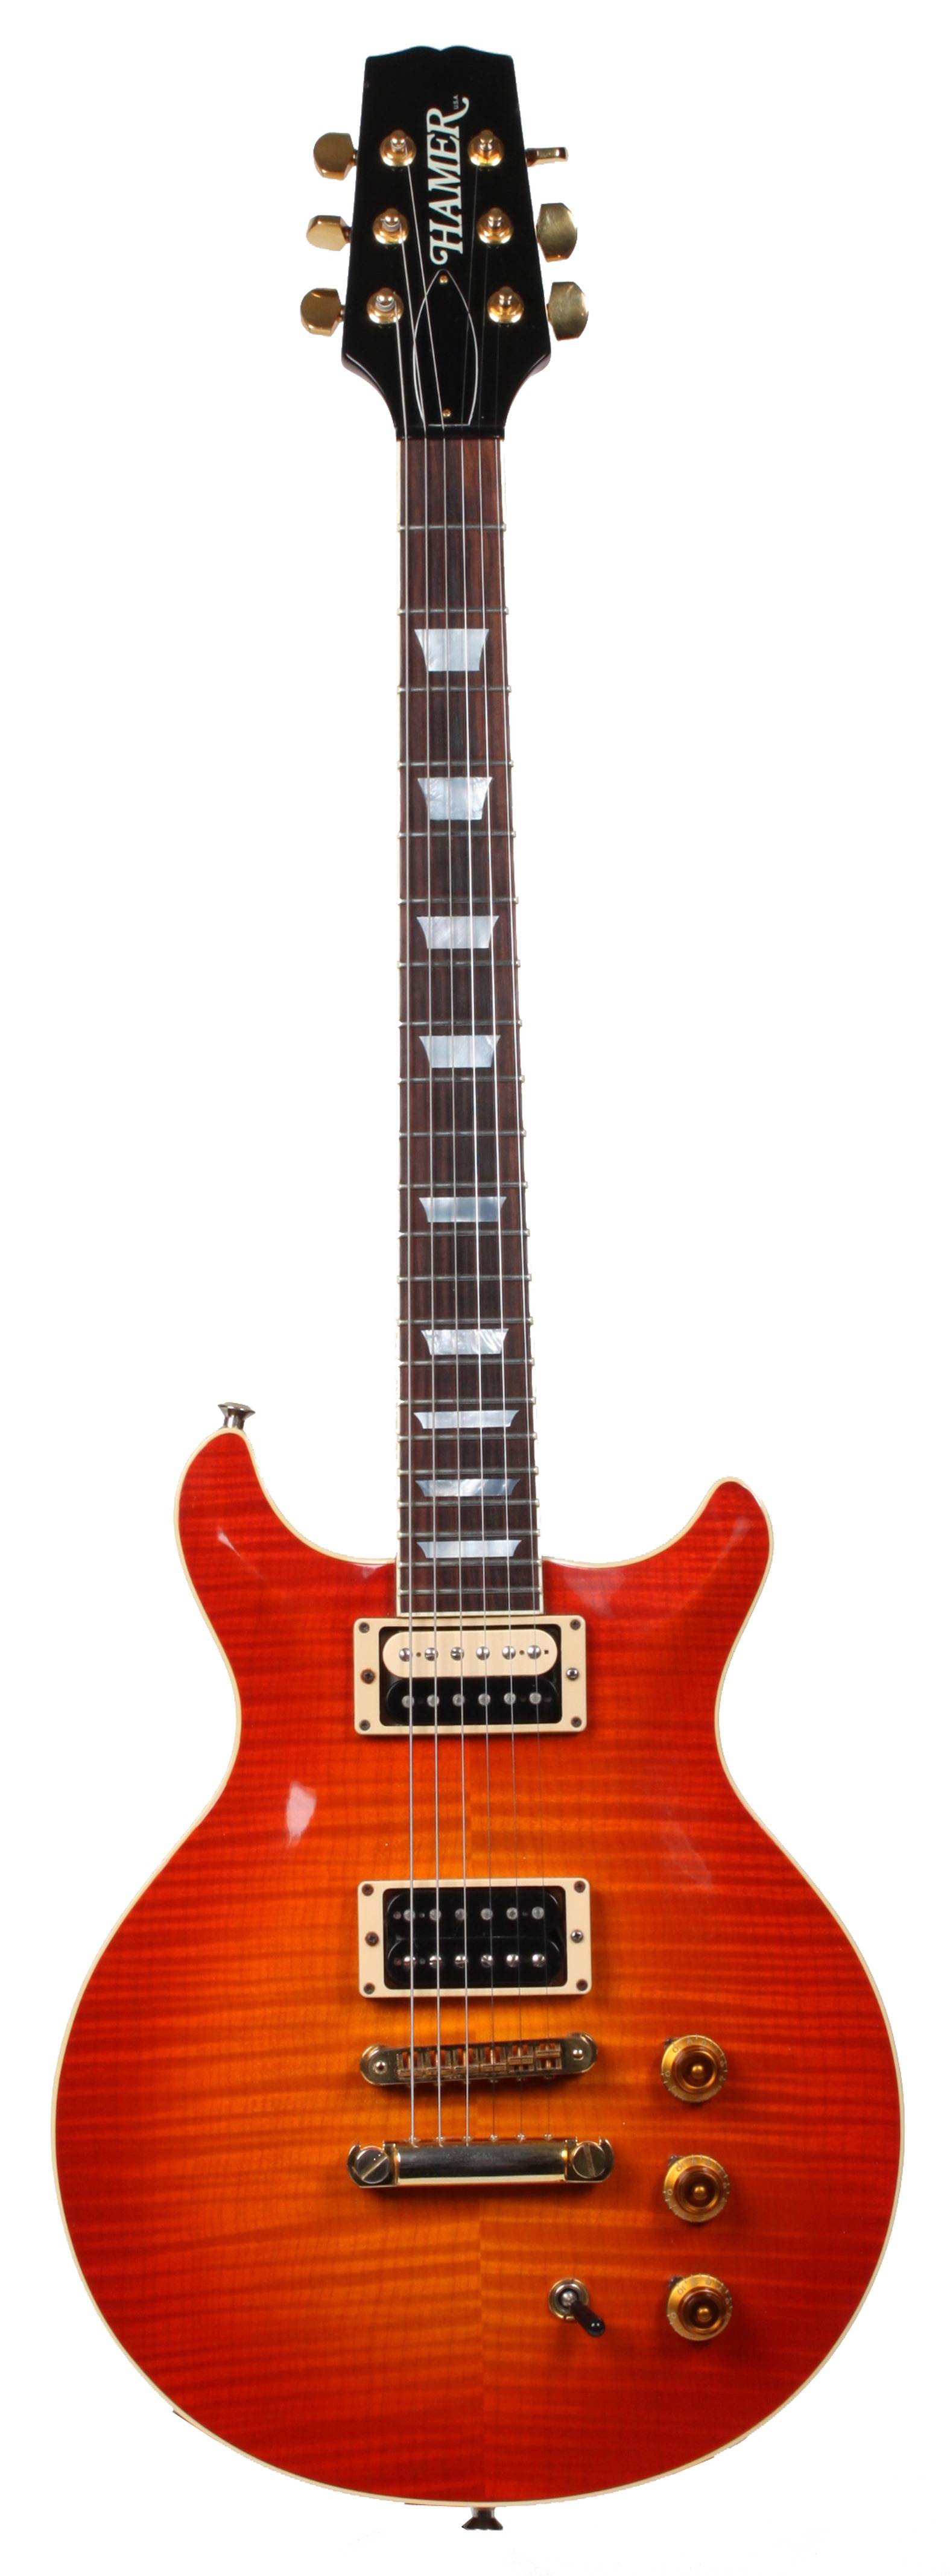 Hamer USA Special FM 1993 Cherry Sunburst Guitar For Sale MJ